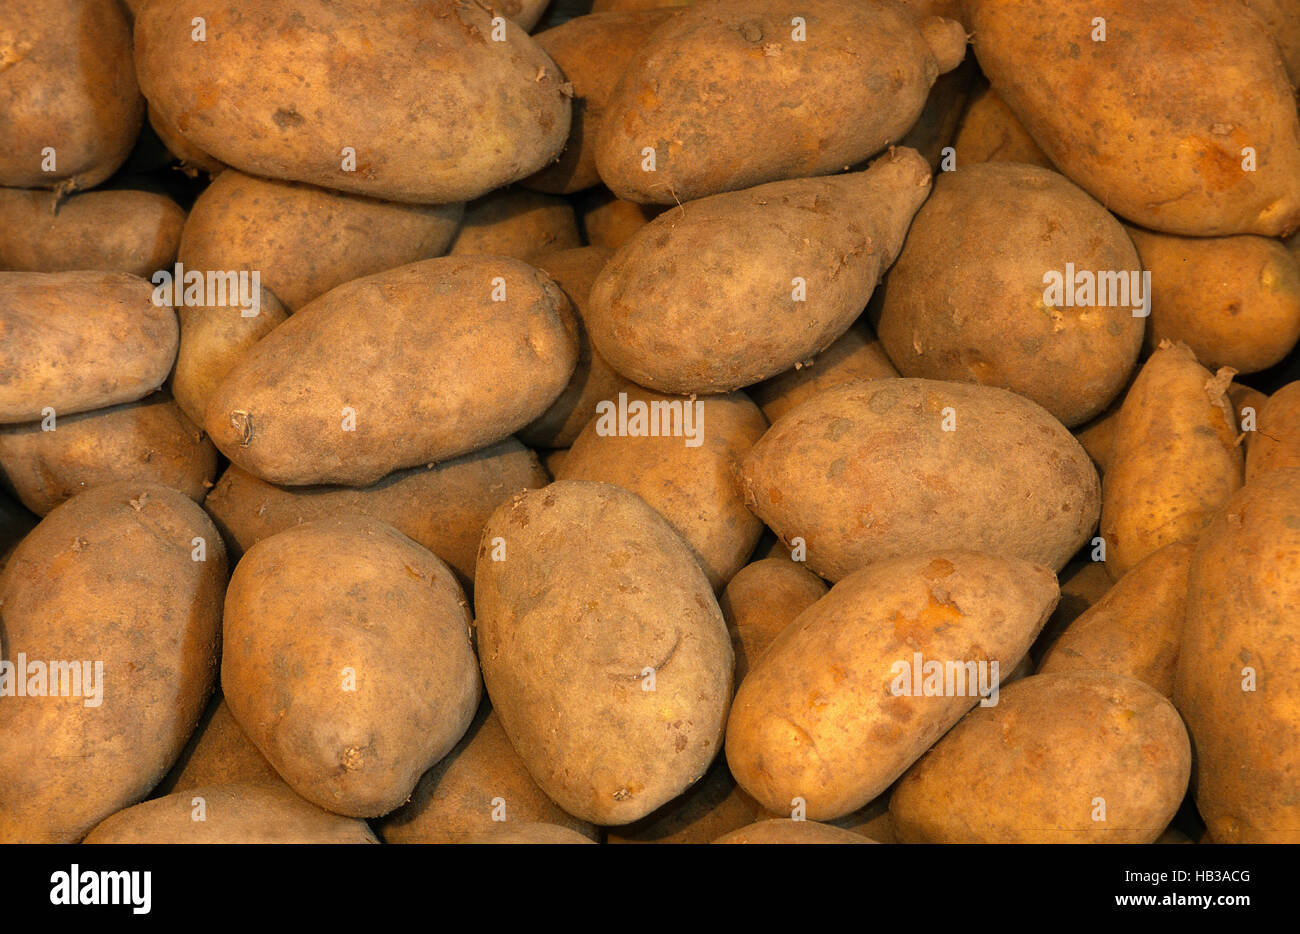 potato, Solanum tuberosum, Stock Photo